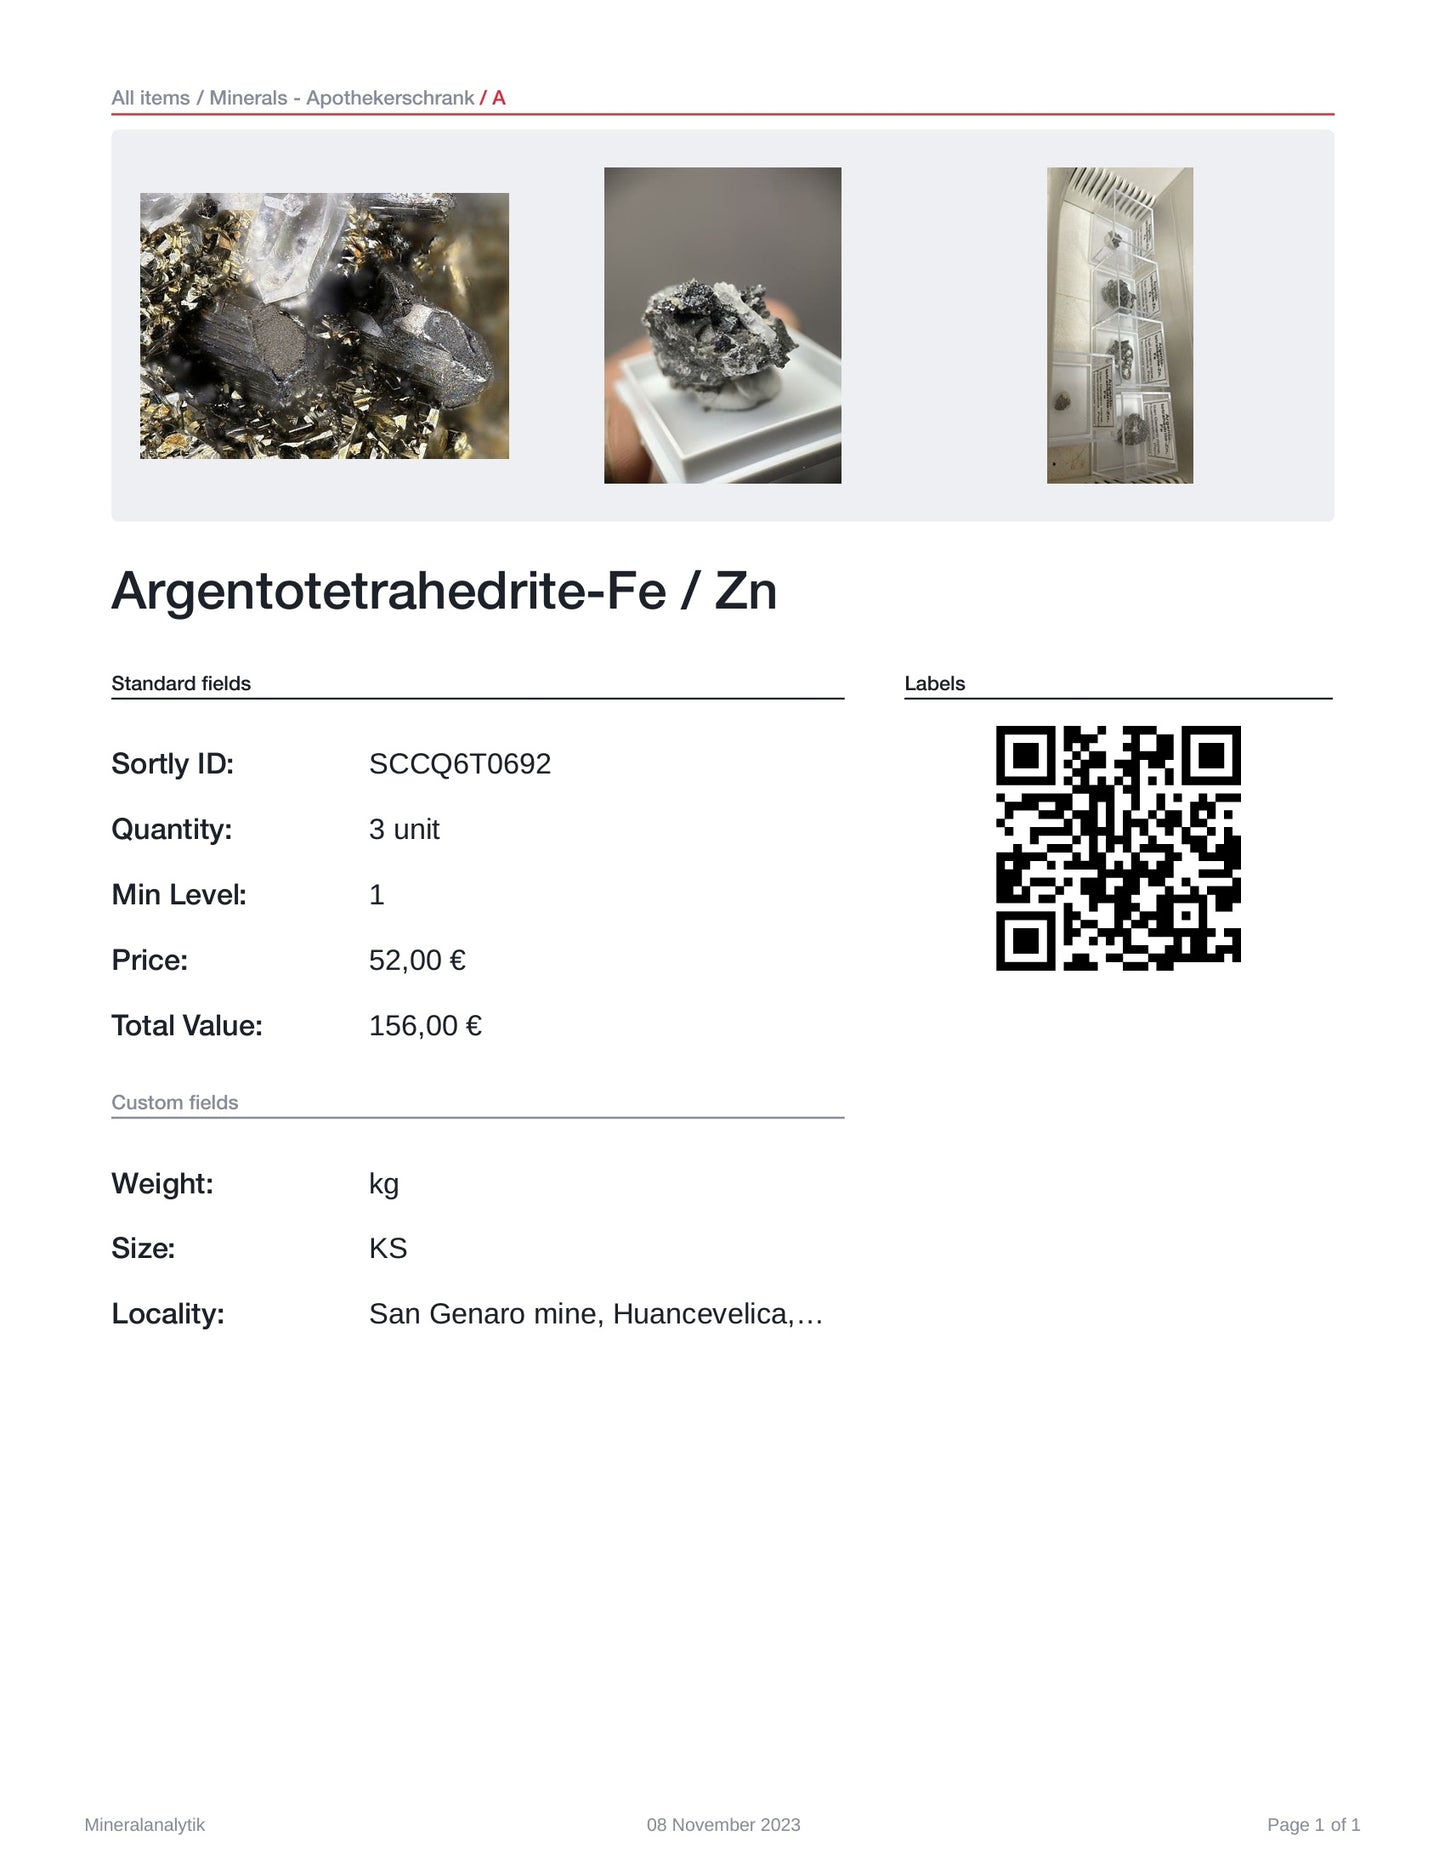 Argentotetrahedrite-Fe / Zn